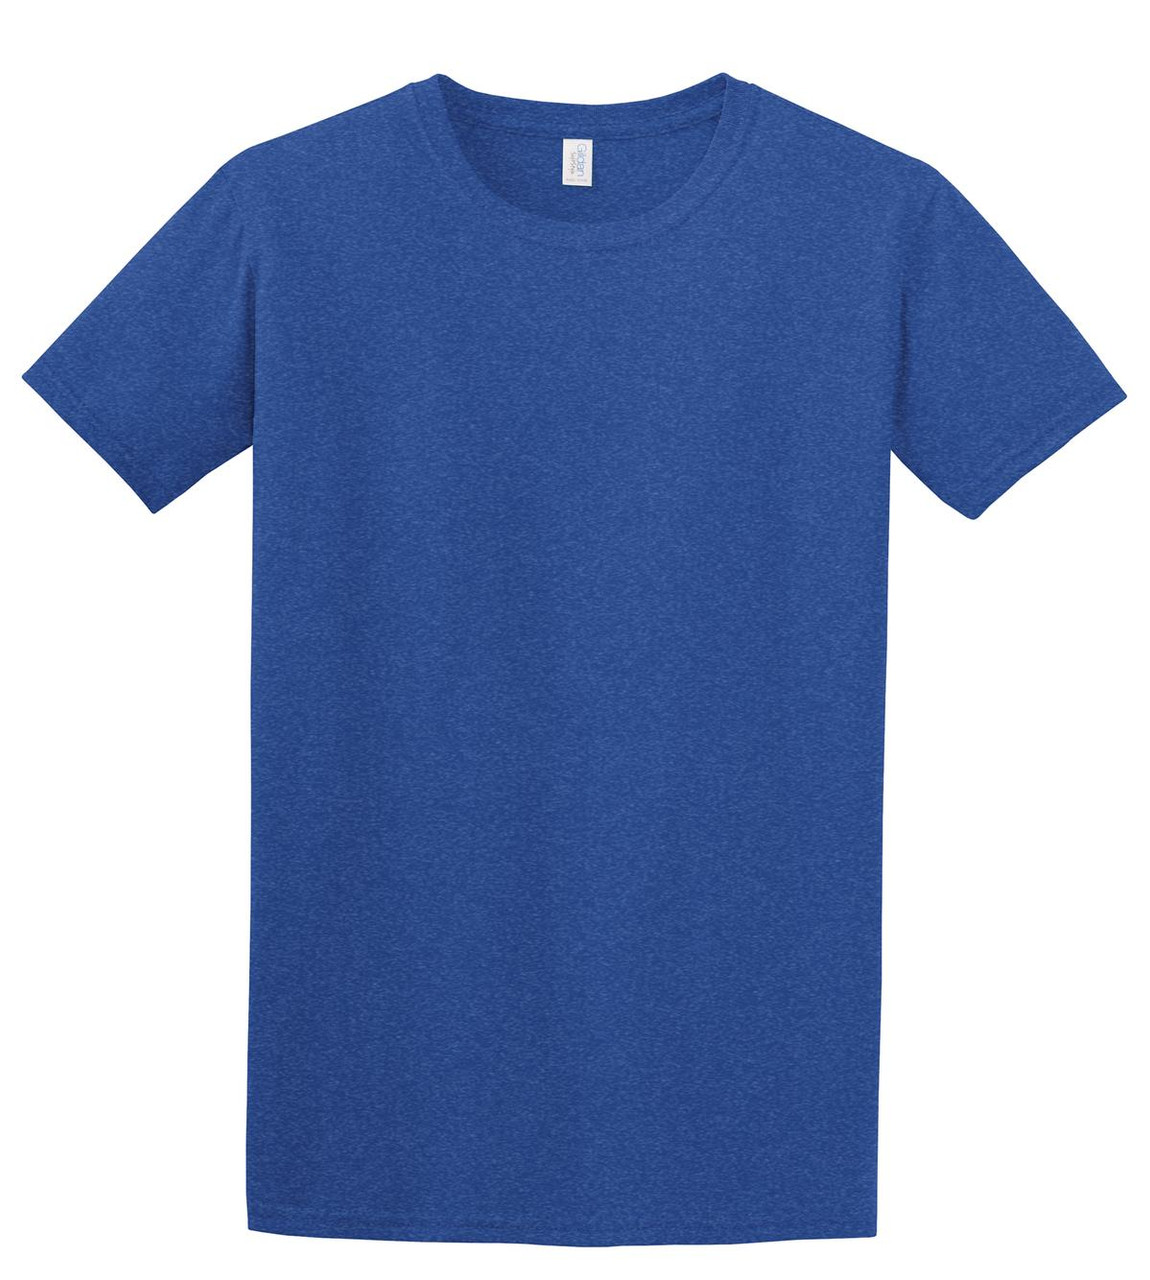 Gildan - Softstyle T-Shirt - 64000 - Natural - Size: XL